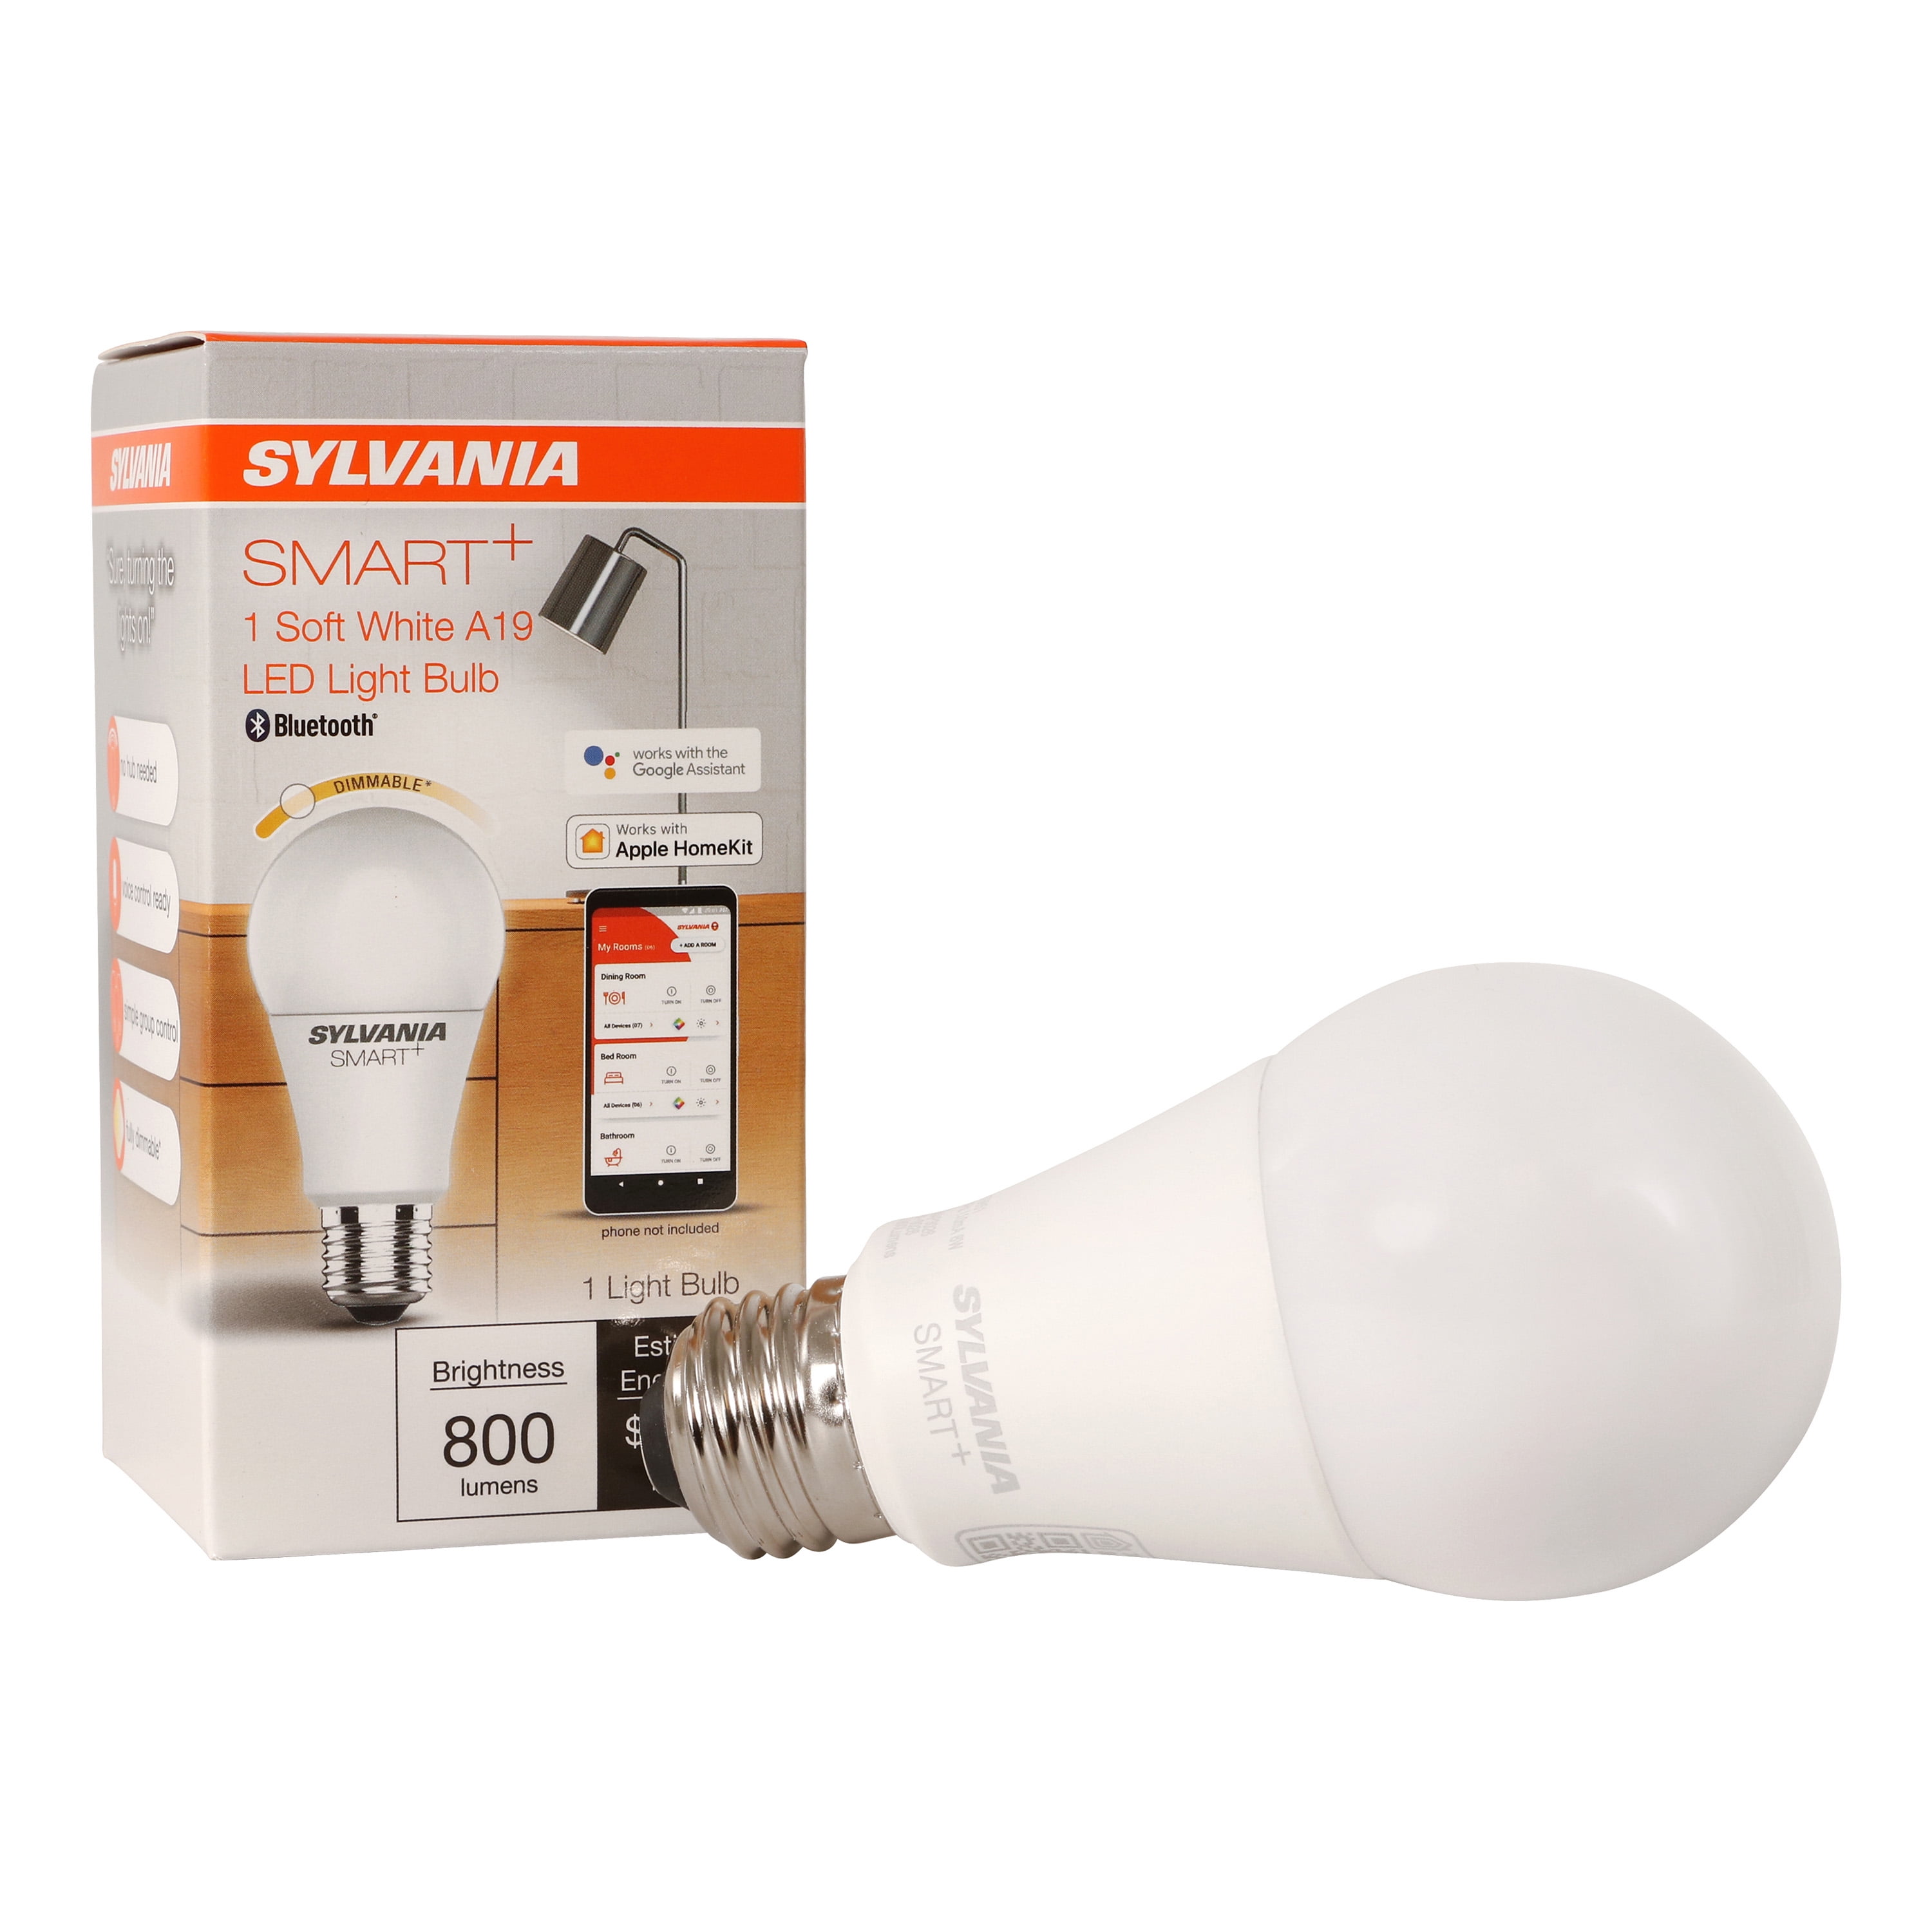 SYLVANIA Smart LED Light Bulb, A19, Dimmable, 2700K, Works with Amazon Alexa, Apple HomeKit and Google Assistant - Walmart.com